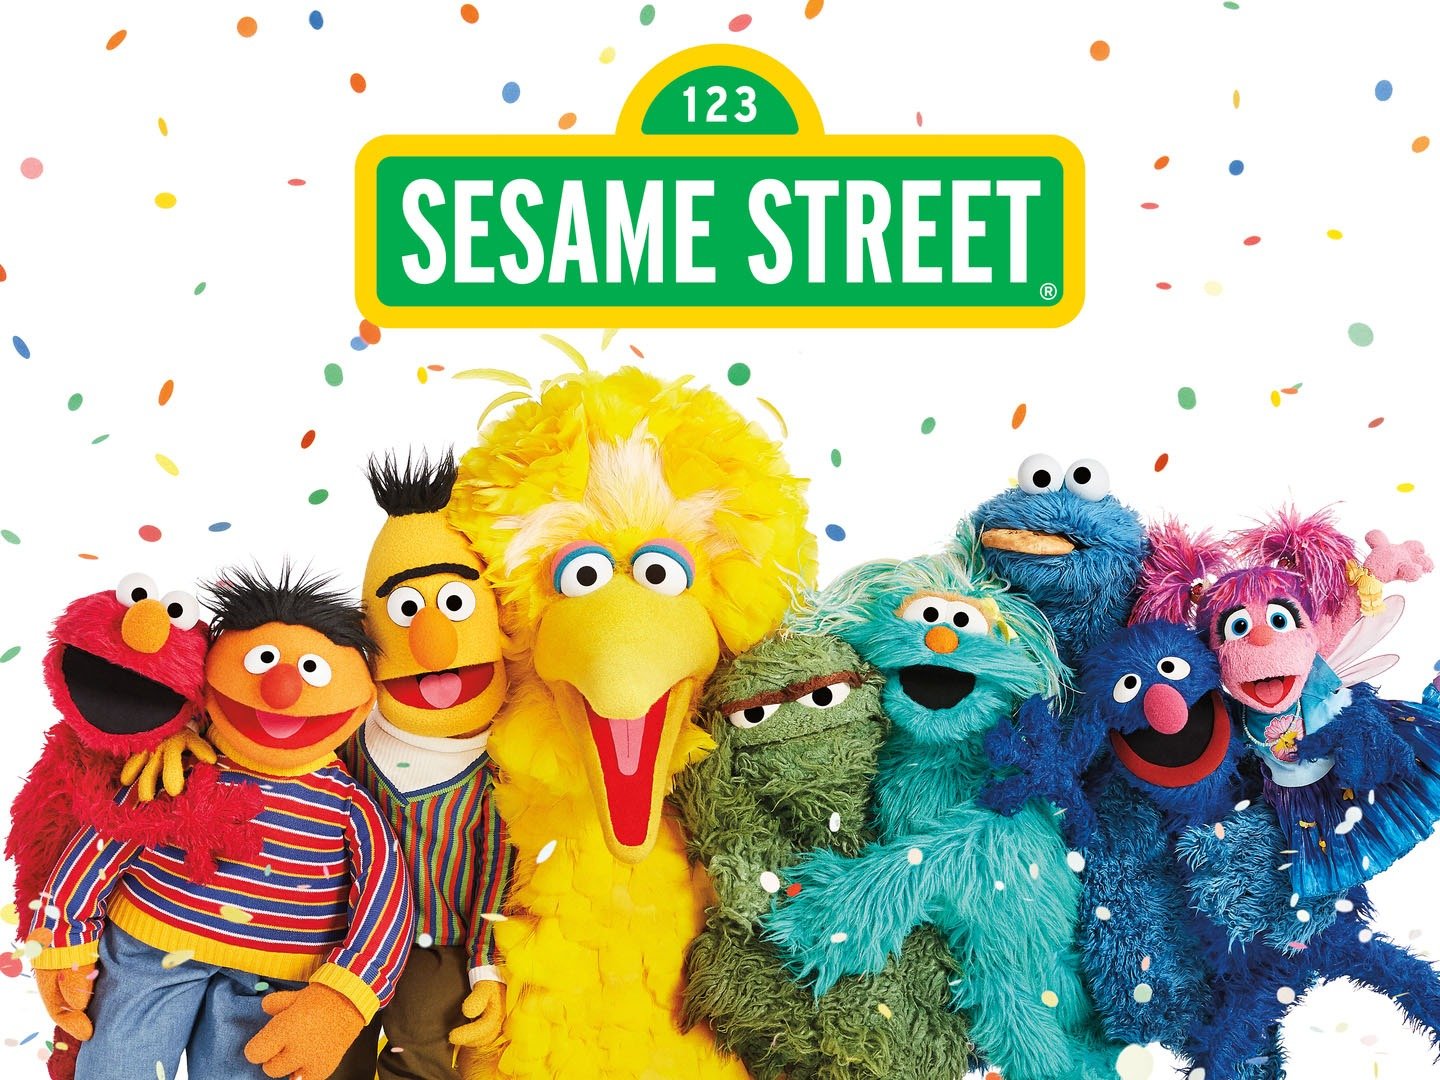 Sesame Street - Rotten Tomatoes